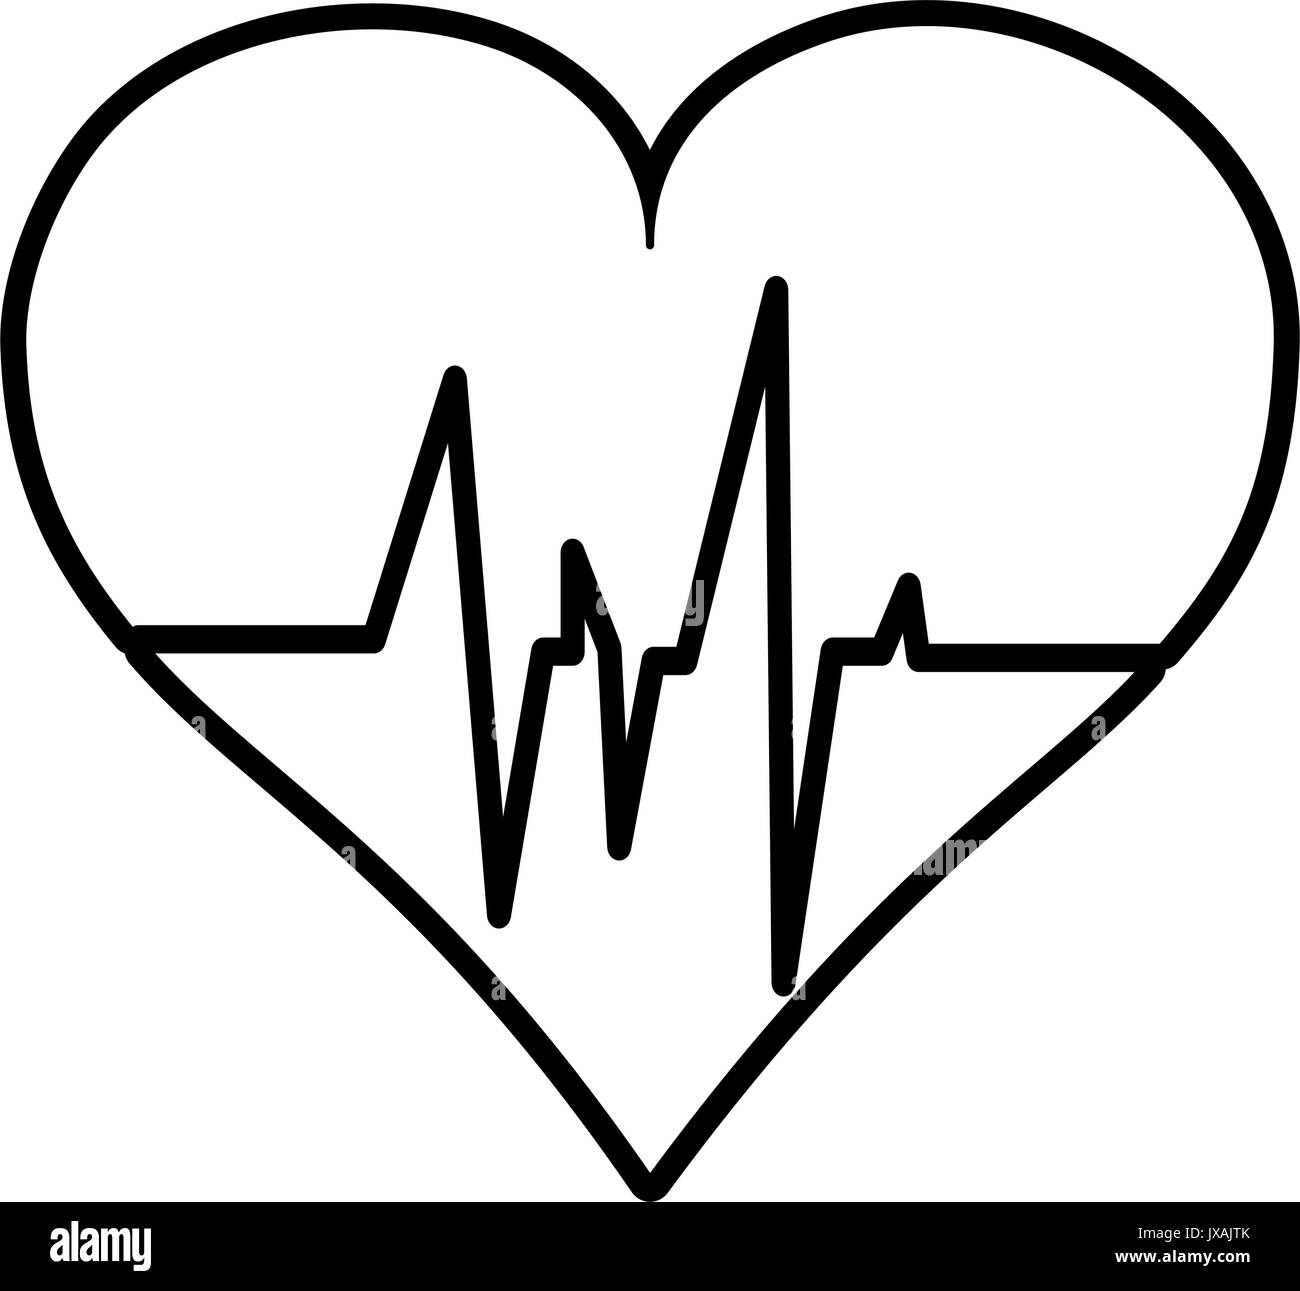 heartbeat vector illustration Stock Vector Image & Art - Alamy